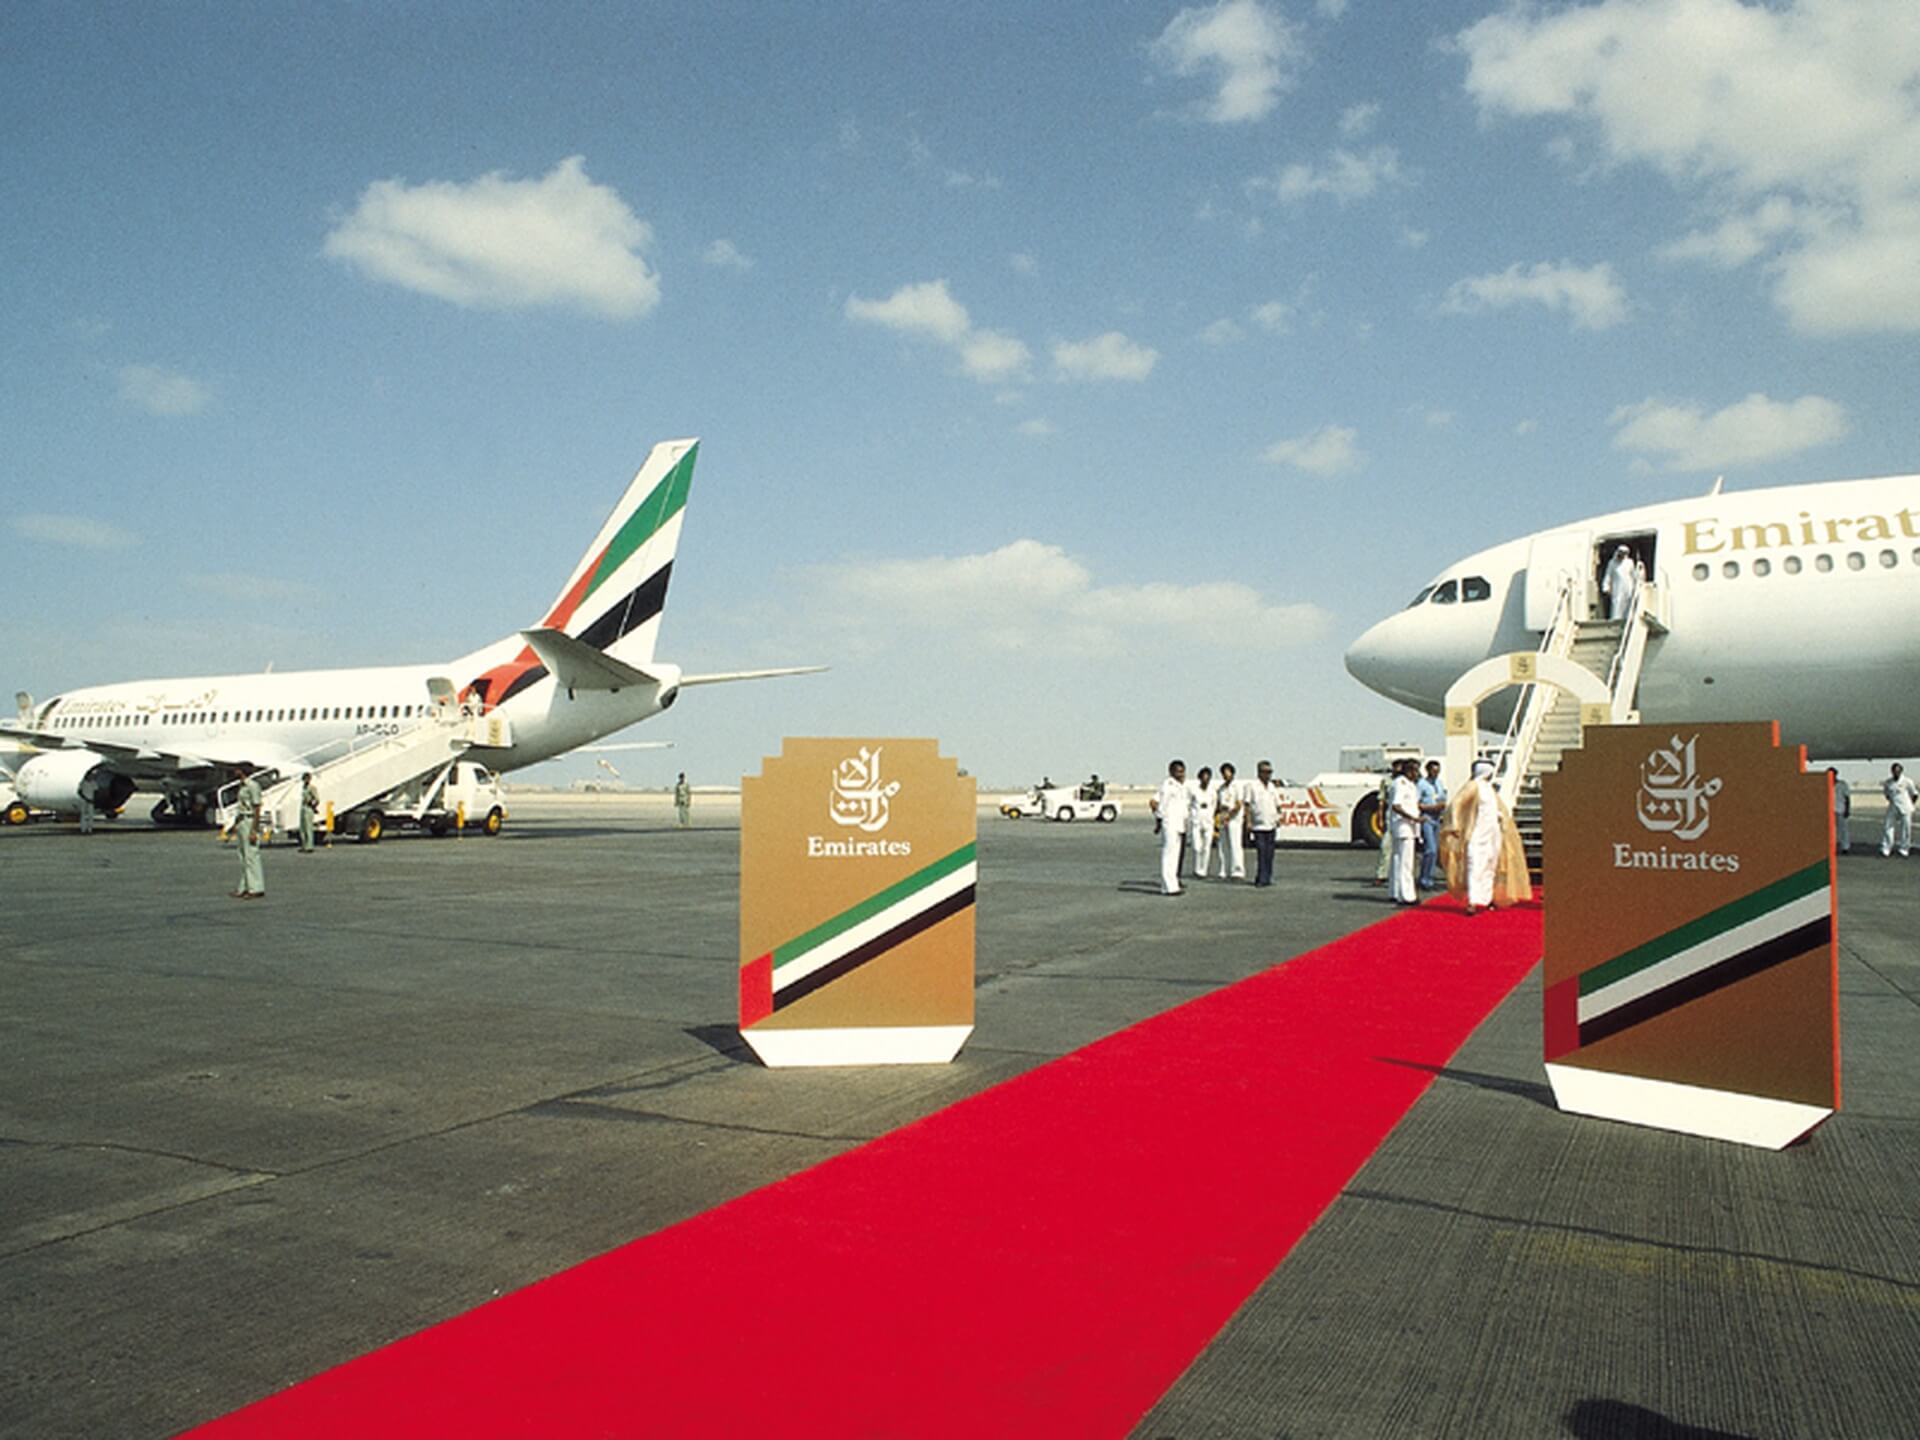 Emirates first flight